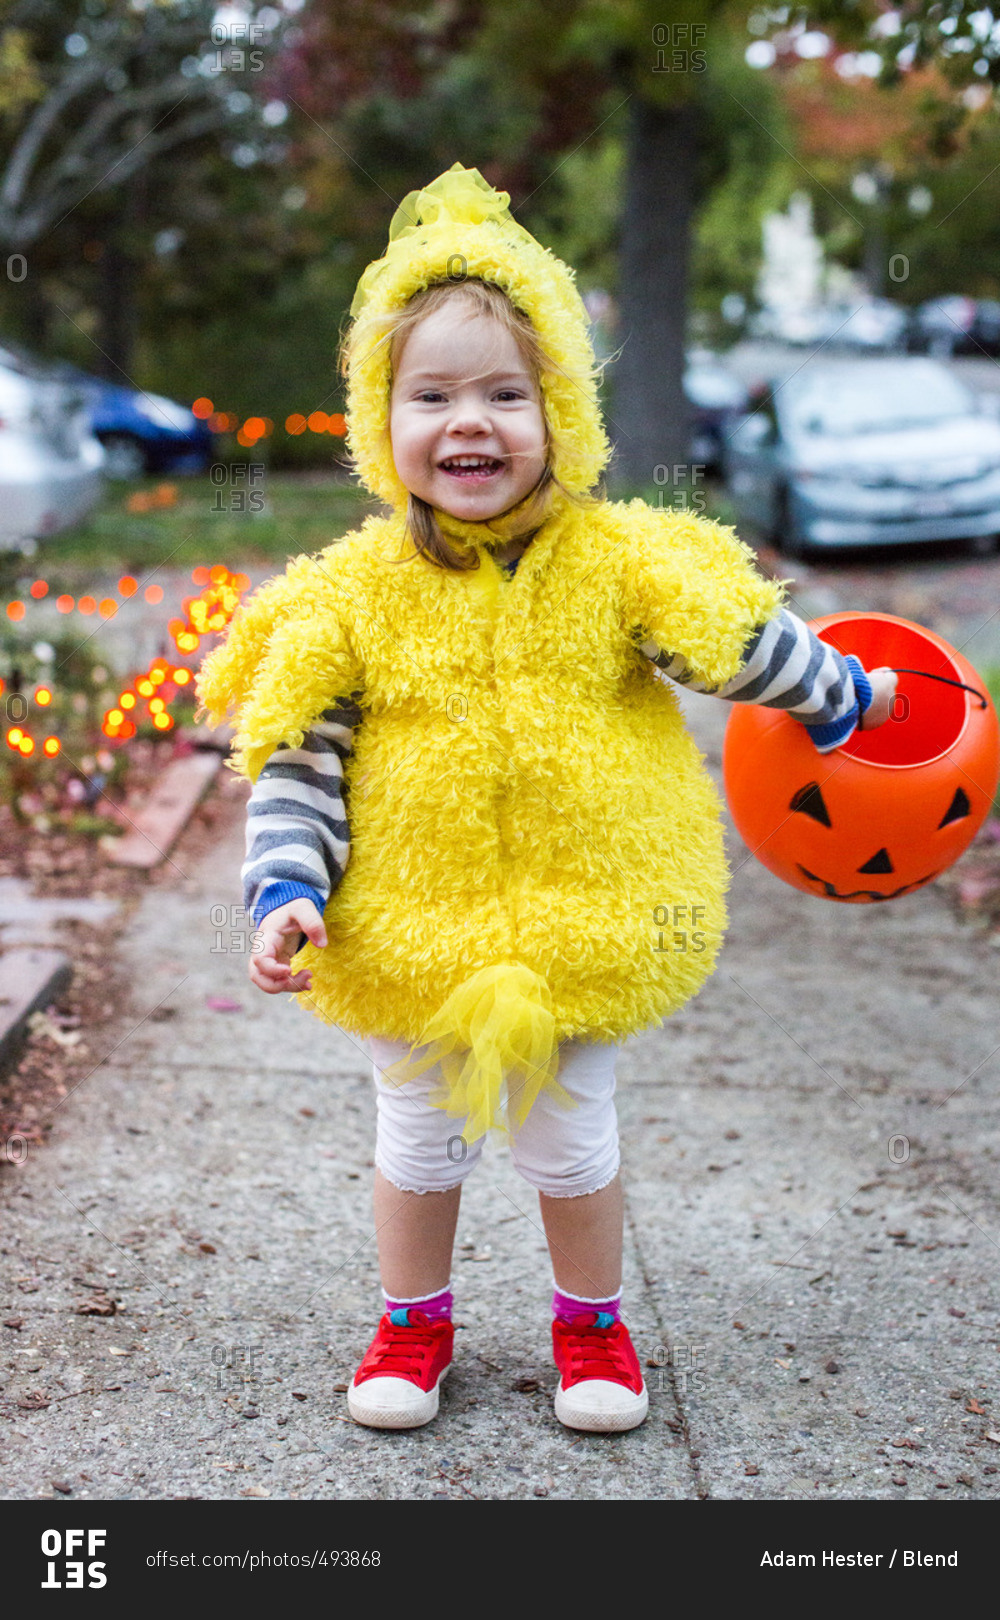 Smiling Caucasian girl wearing chicken costume on Halloween